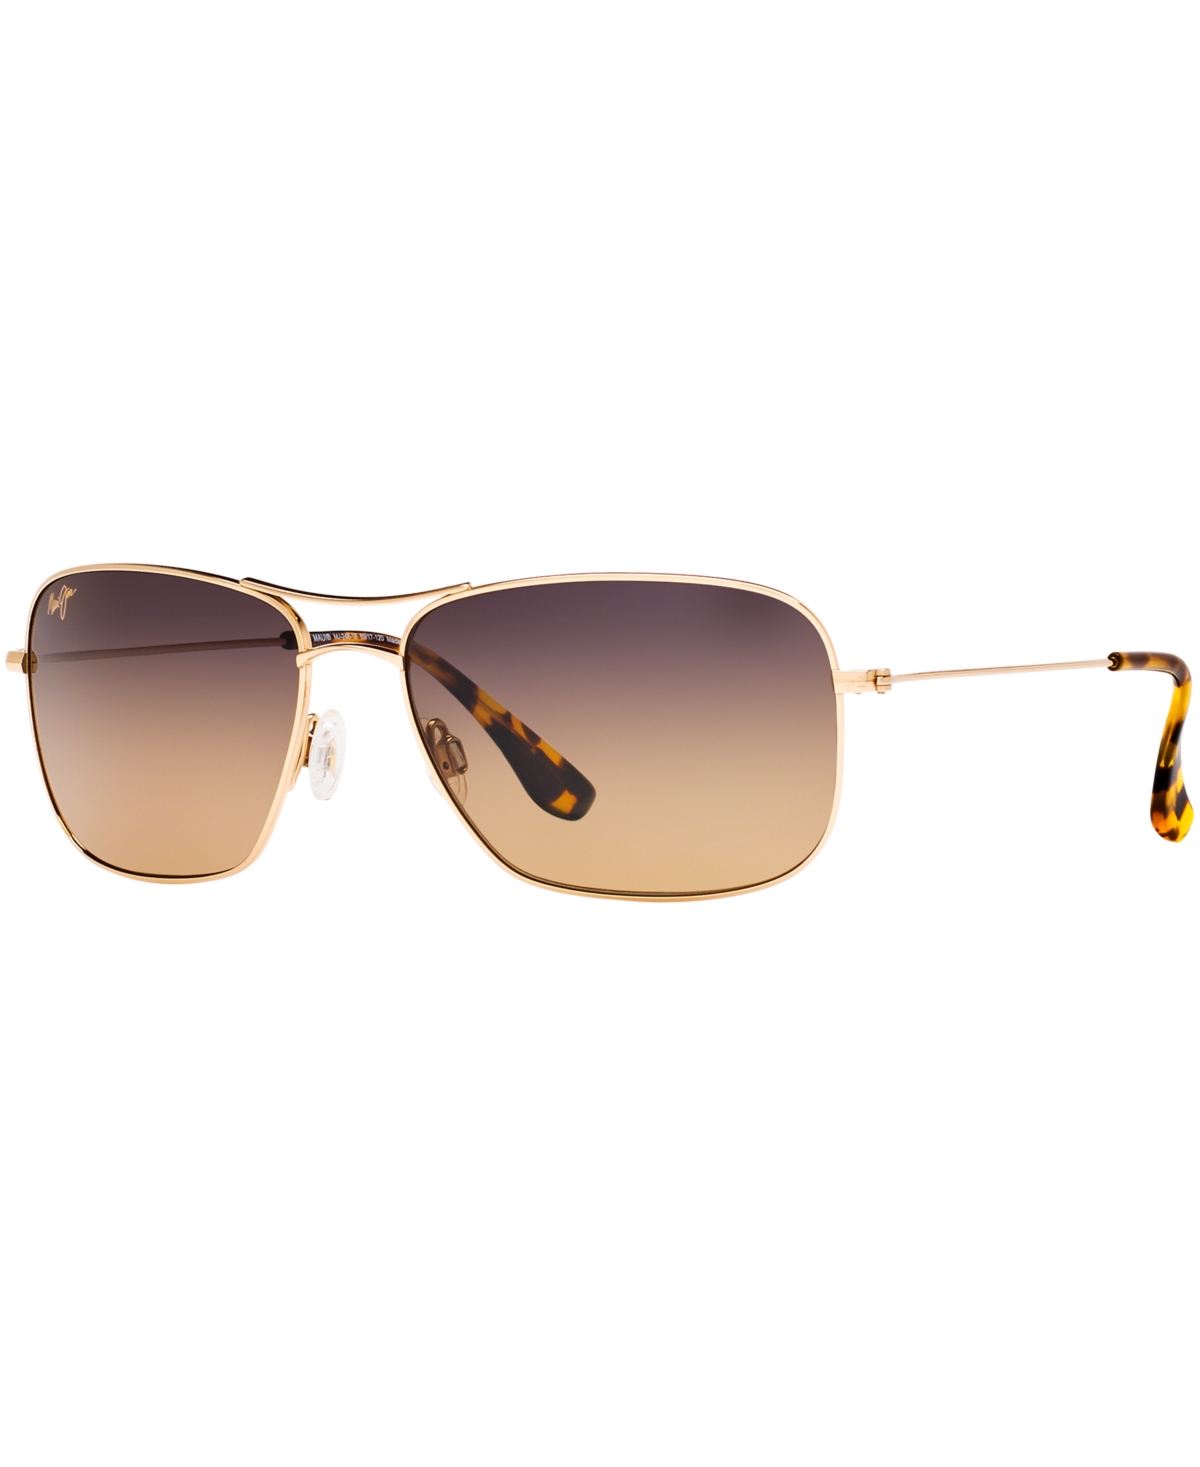 Wiki Wiki Polarized Sunglasses , 246 - Gold/Brown